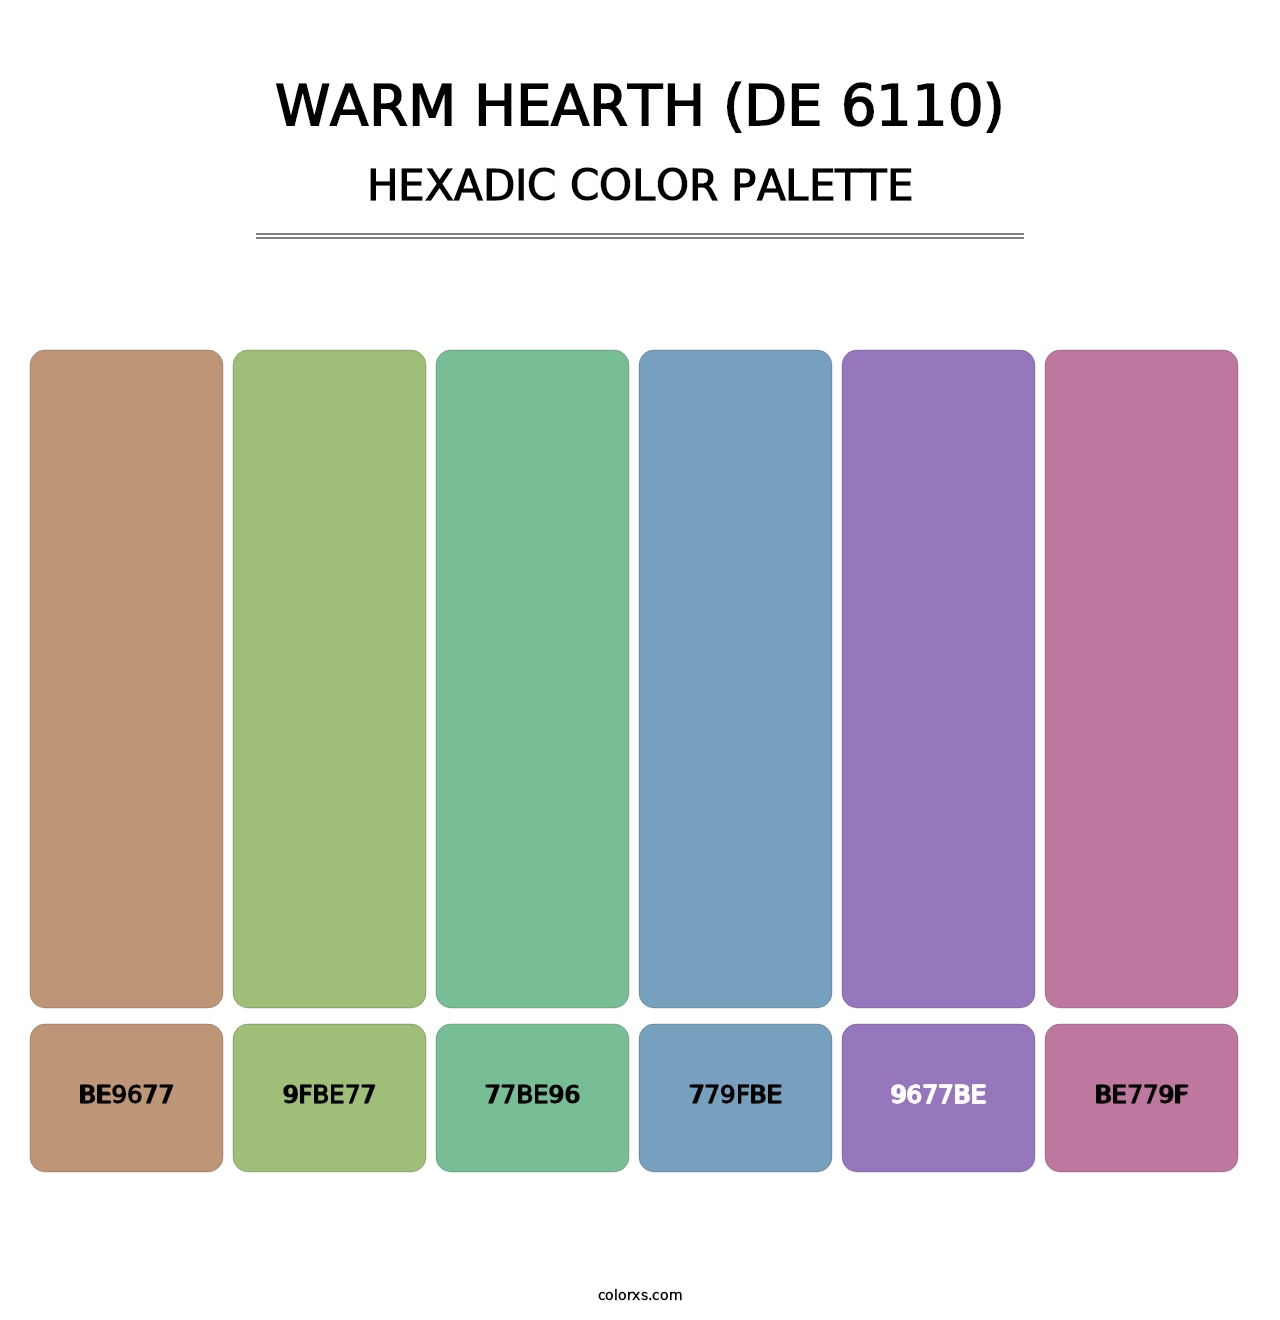 Warm Hearth (DE 6110) - Hexadic Color Palette